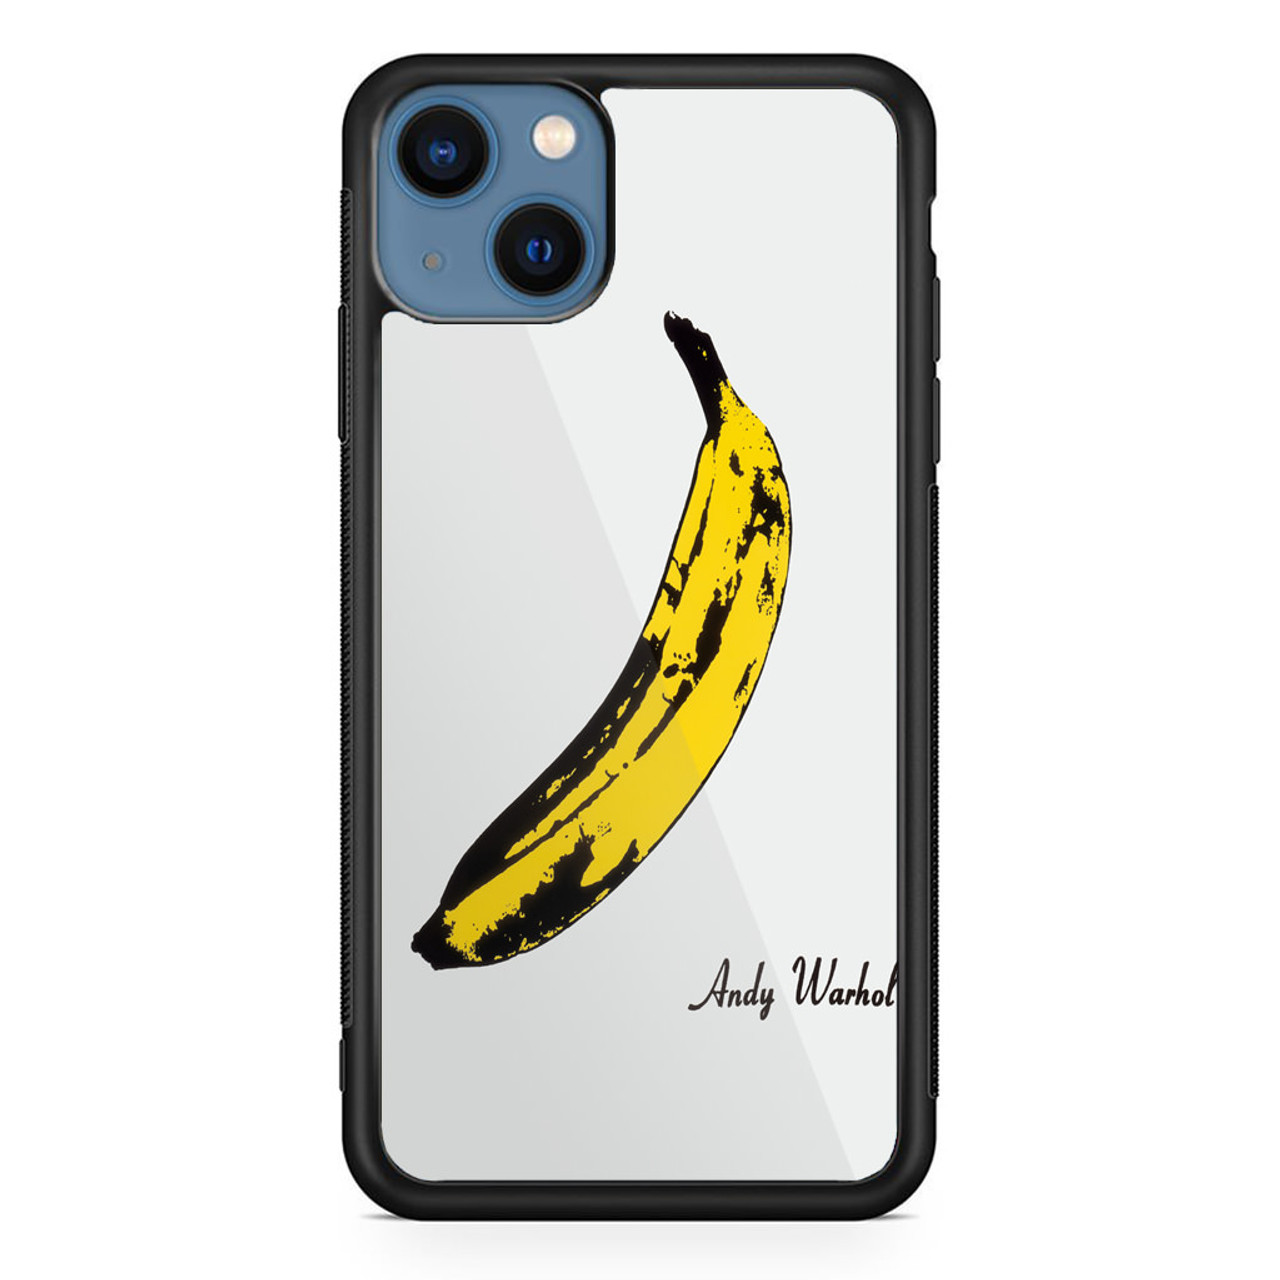 banana iphone